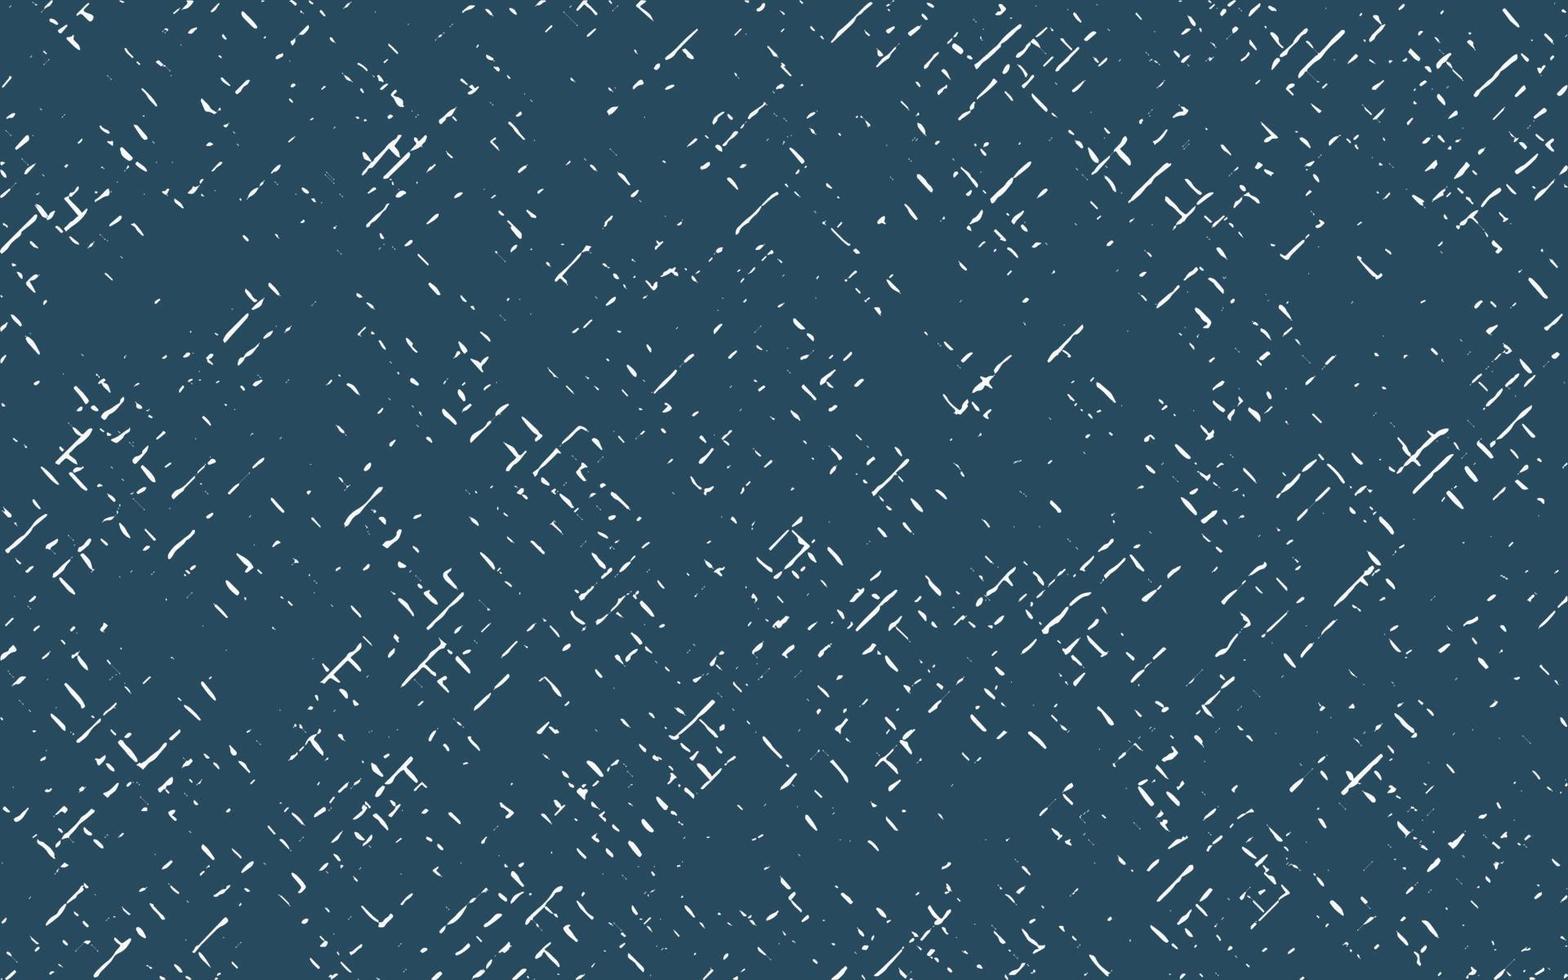 textura de vector grunge. fondo de angustia. rayado, patrón de líneas cruzadas, efecto vintage con color azul mate